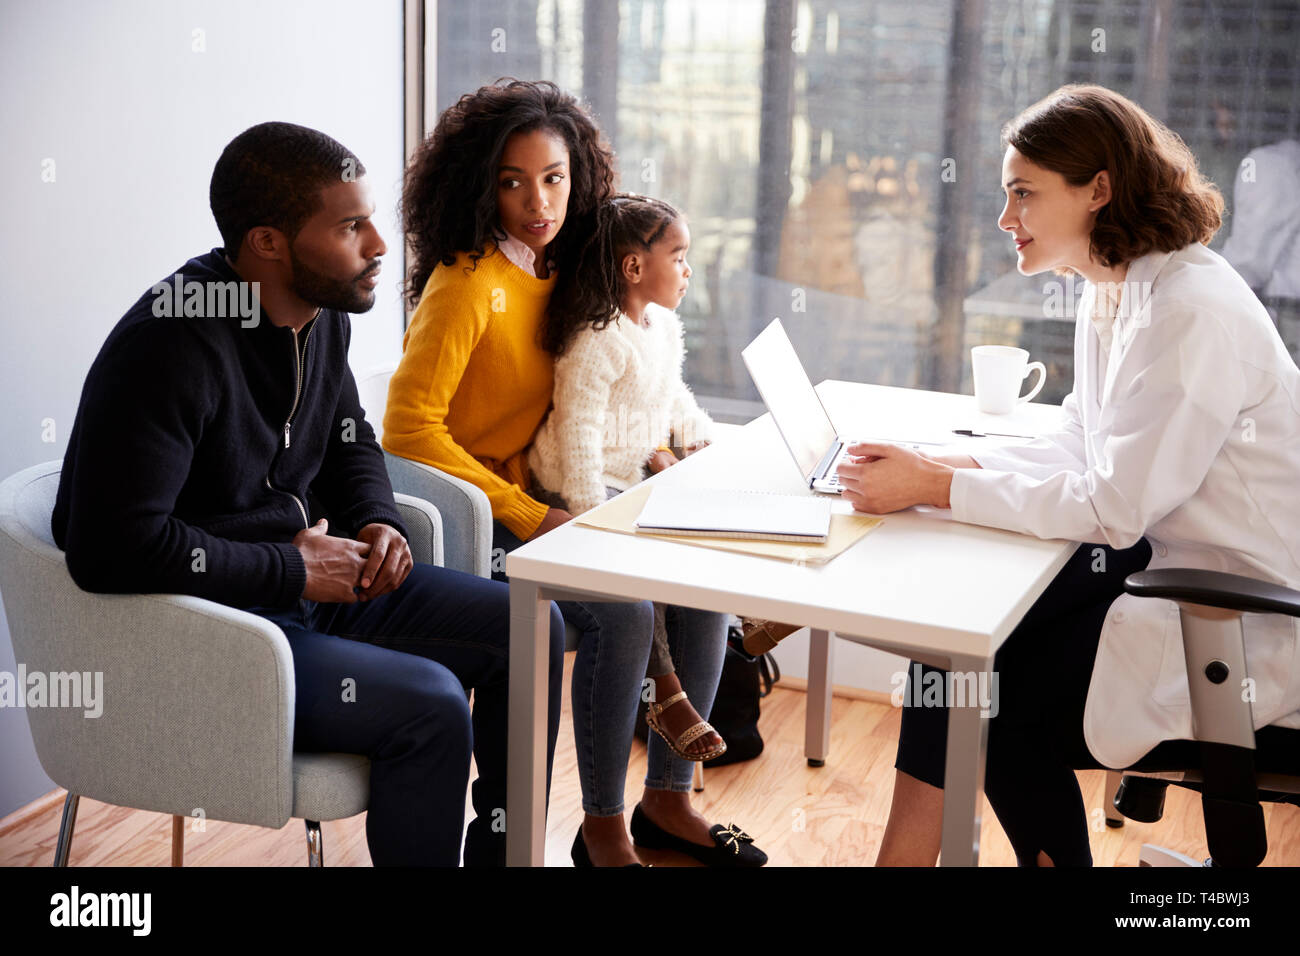 Family Having Consultation With Female Pediatrician In Hospital Office Stock Photo